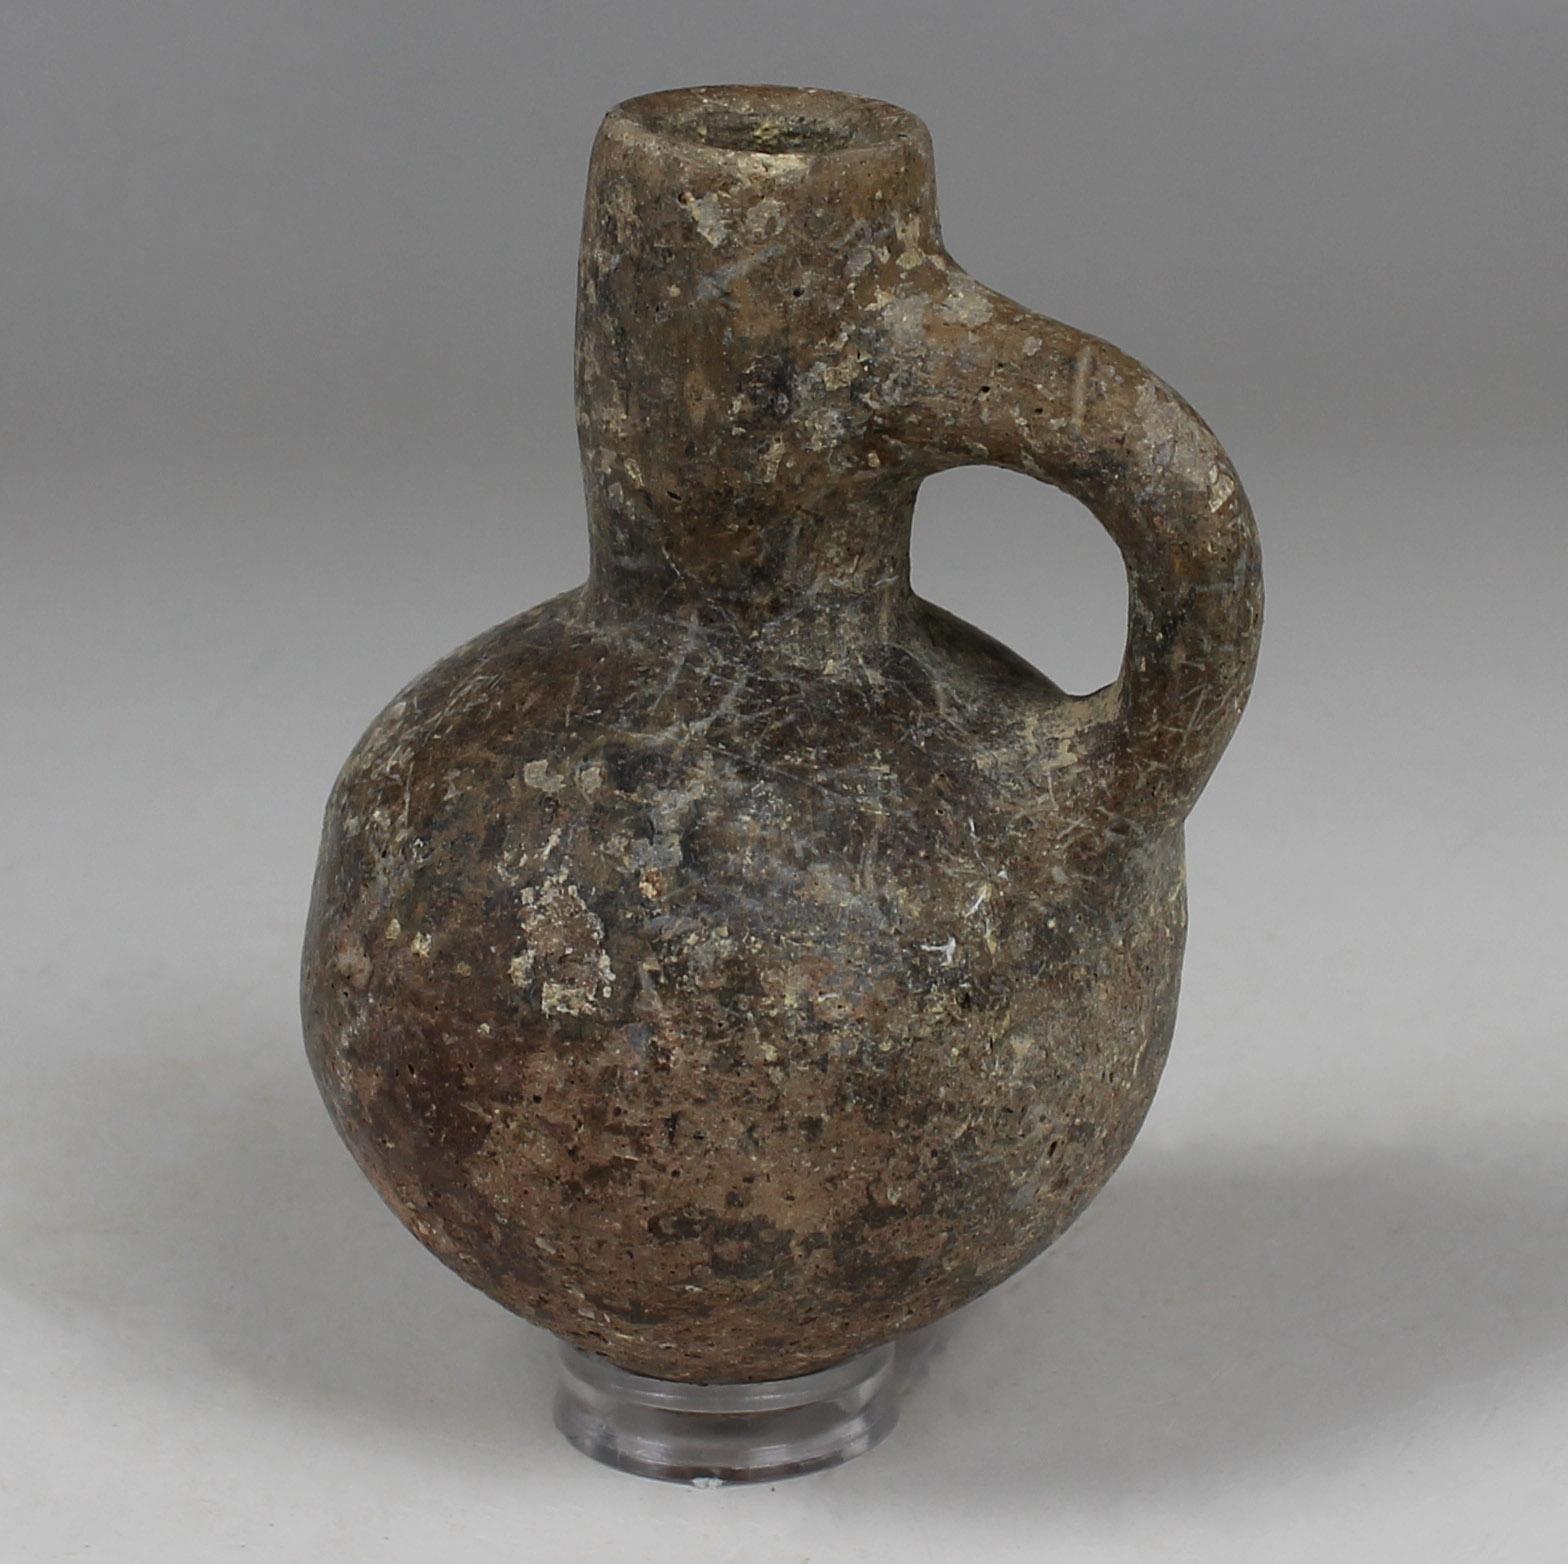 Prehistoric Iron Age black juglet